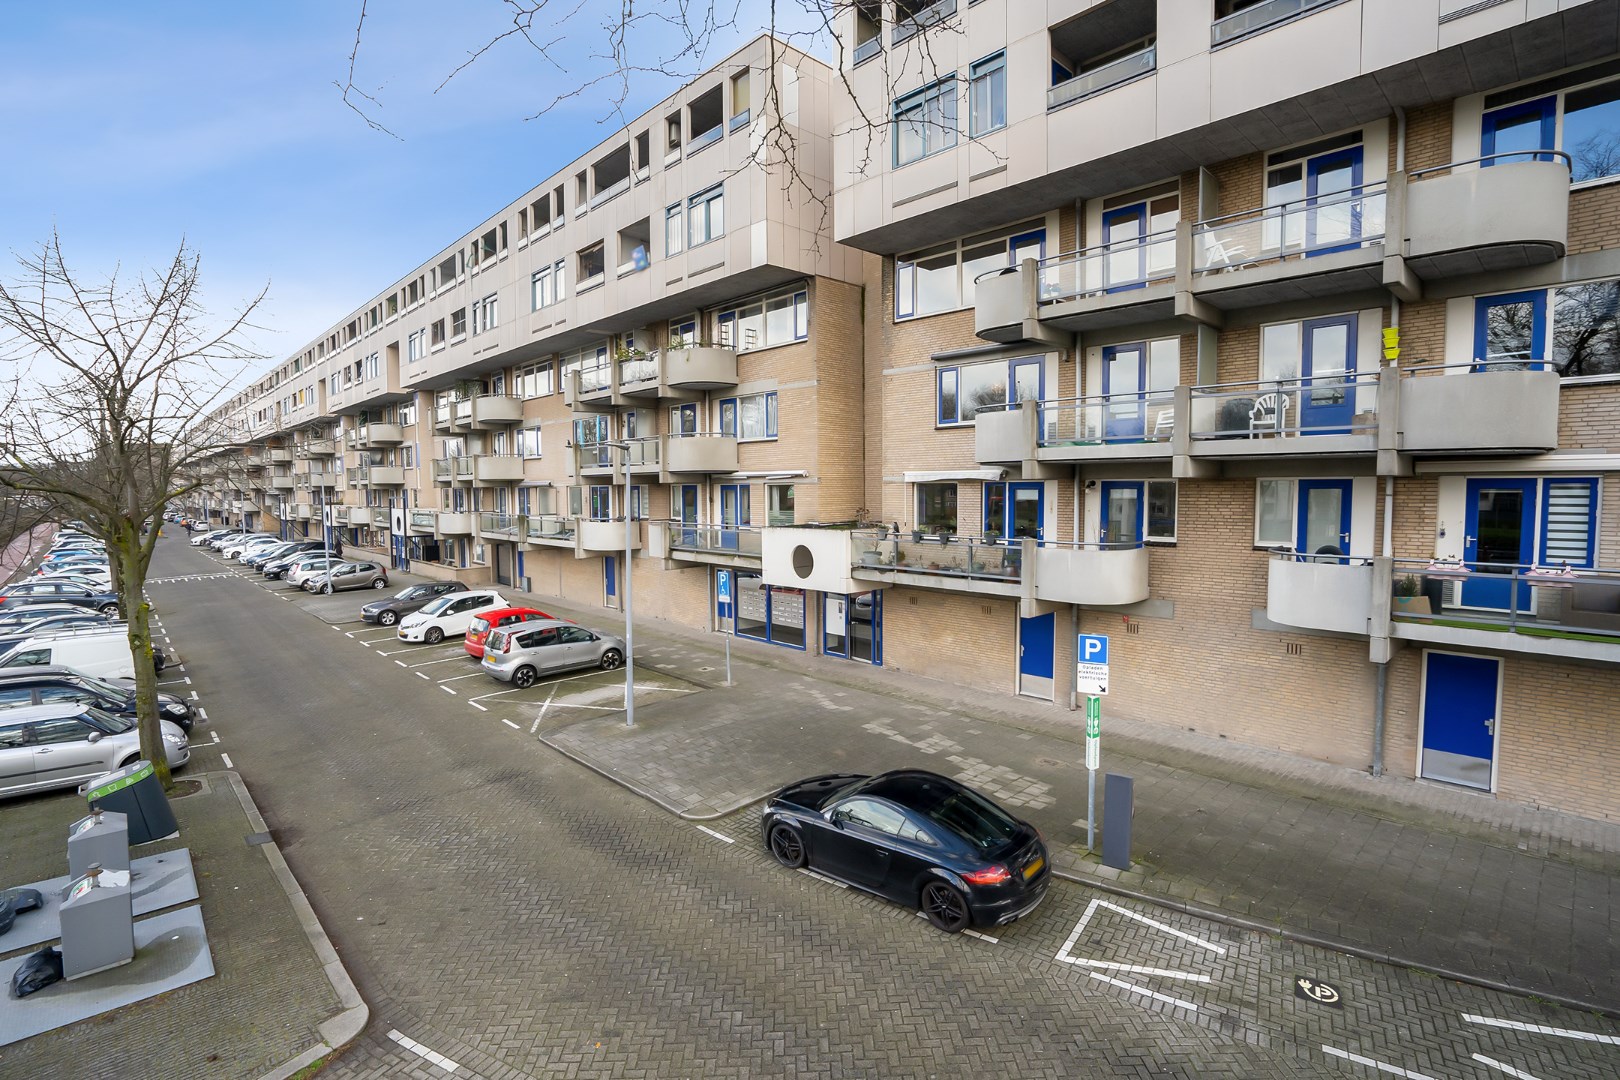 Ruim 3-kamer appartement met balkon, berging op de begane grond en met centrale ligging in Oosterflank! 